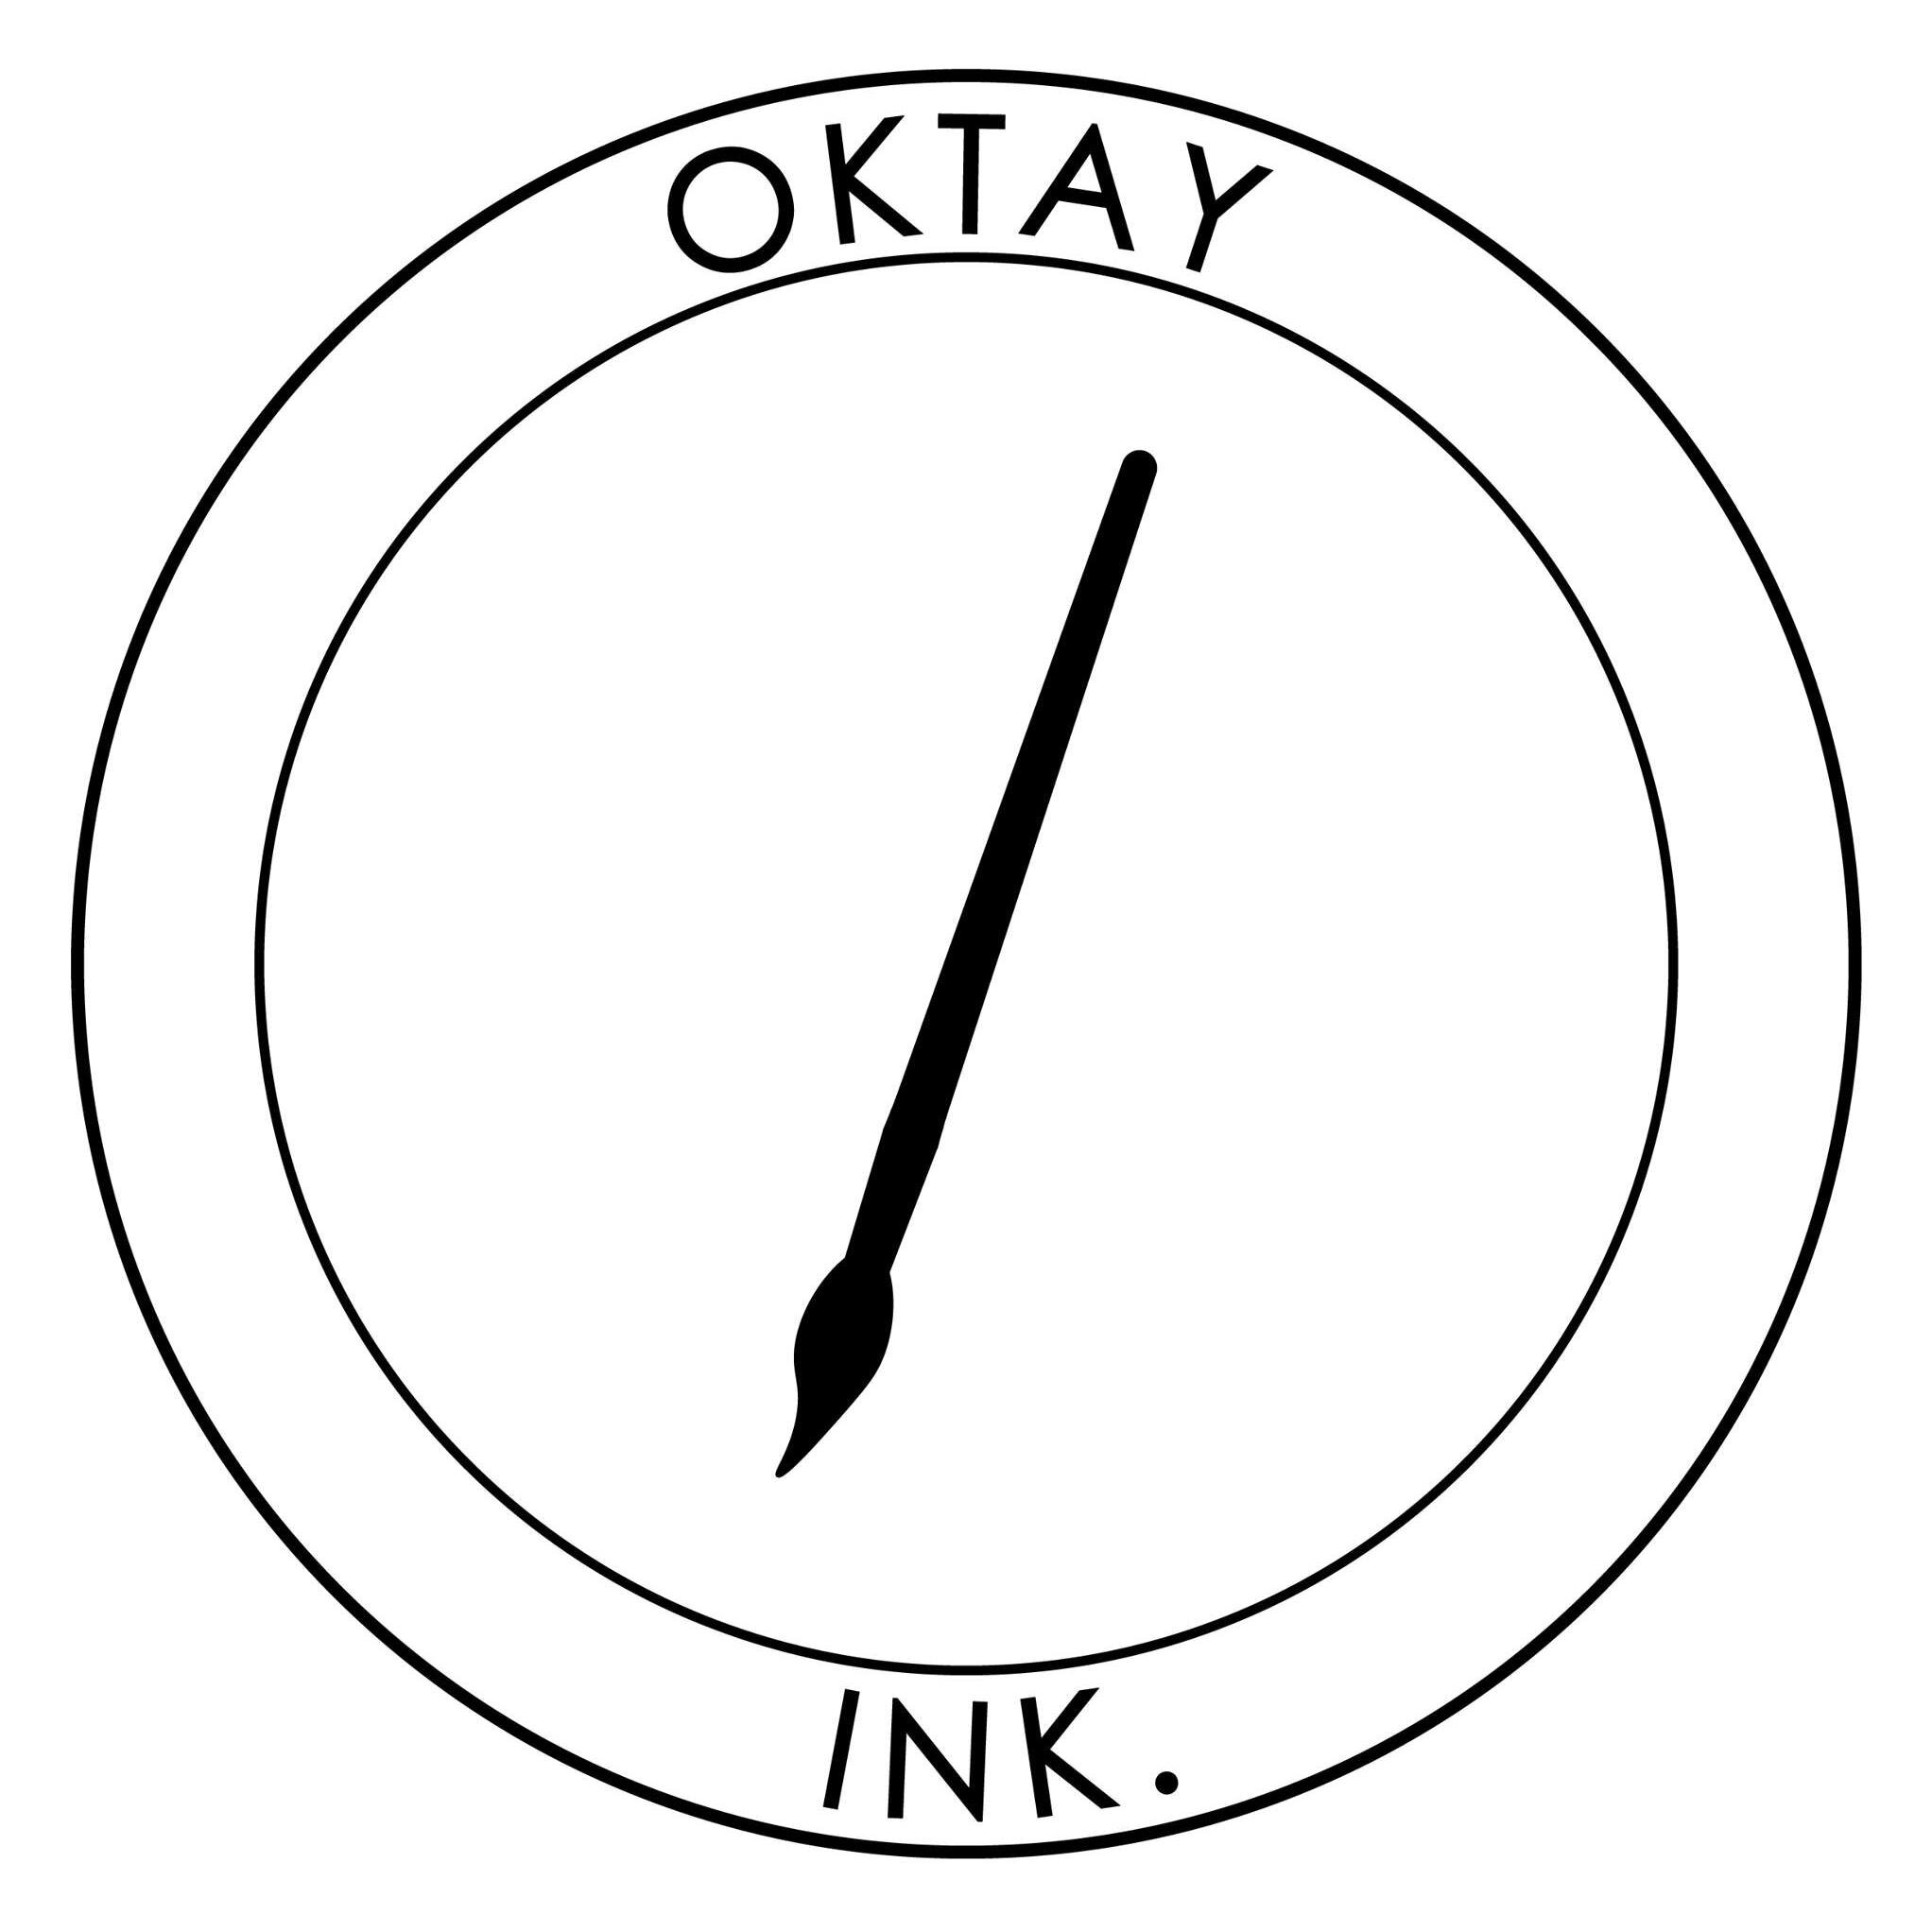 Oktay Ink Logotyp i svartvitt